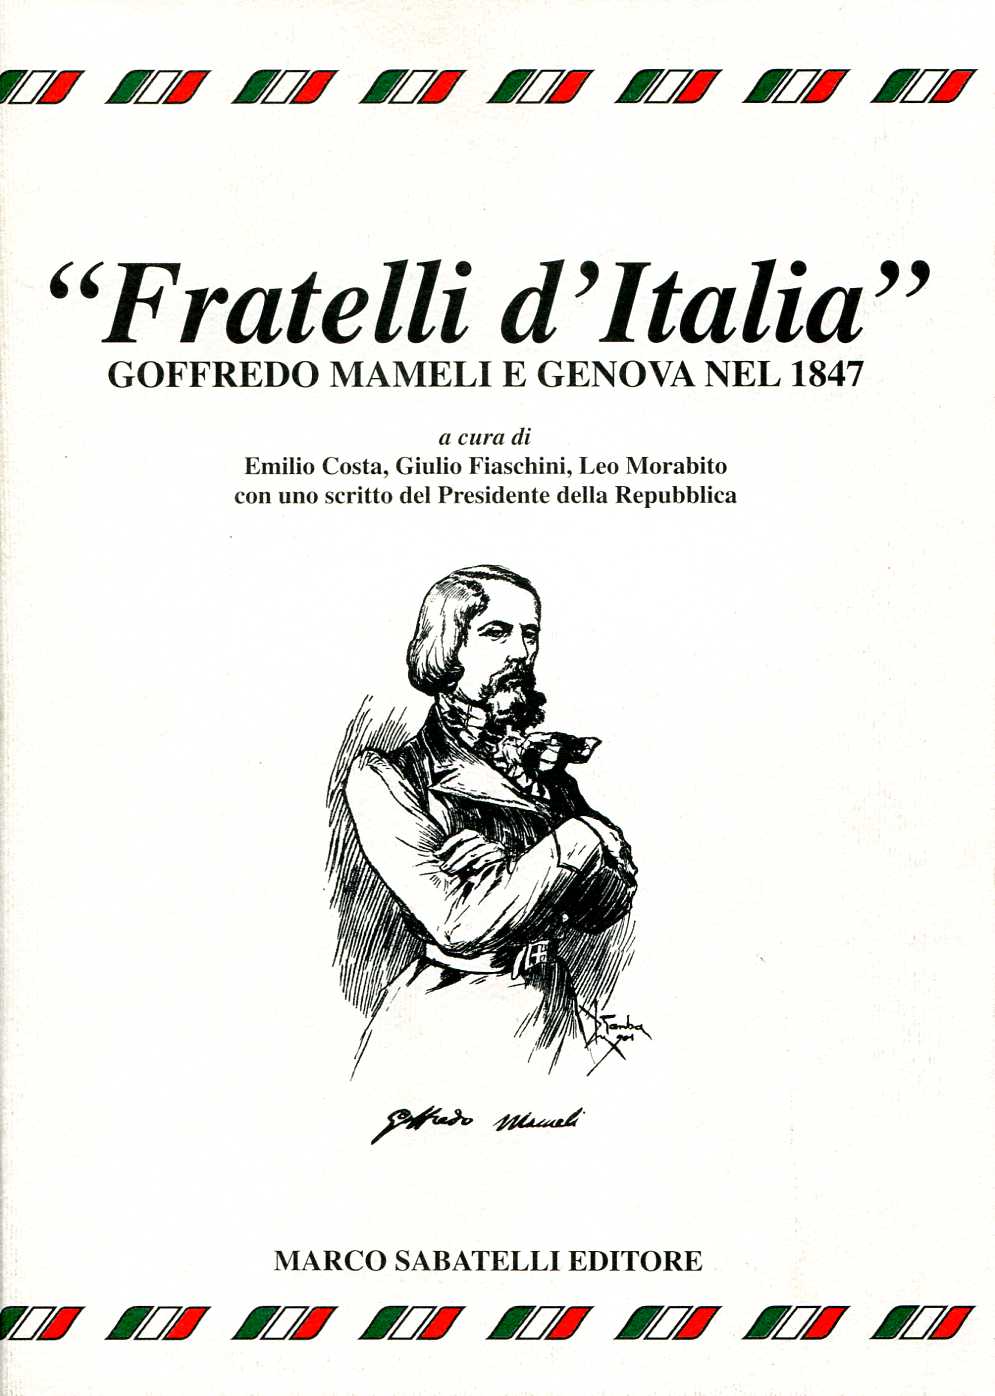 Fratelli d'Italia - Goffredo Mameli e Genova nel 1847